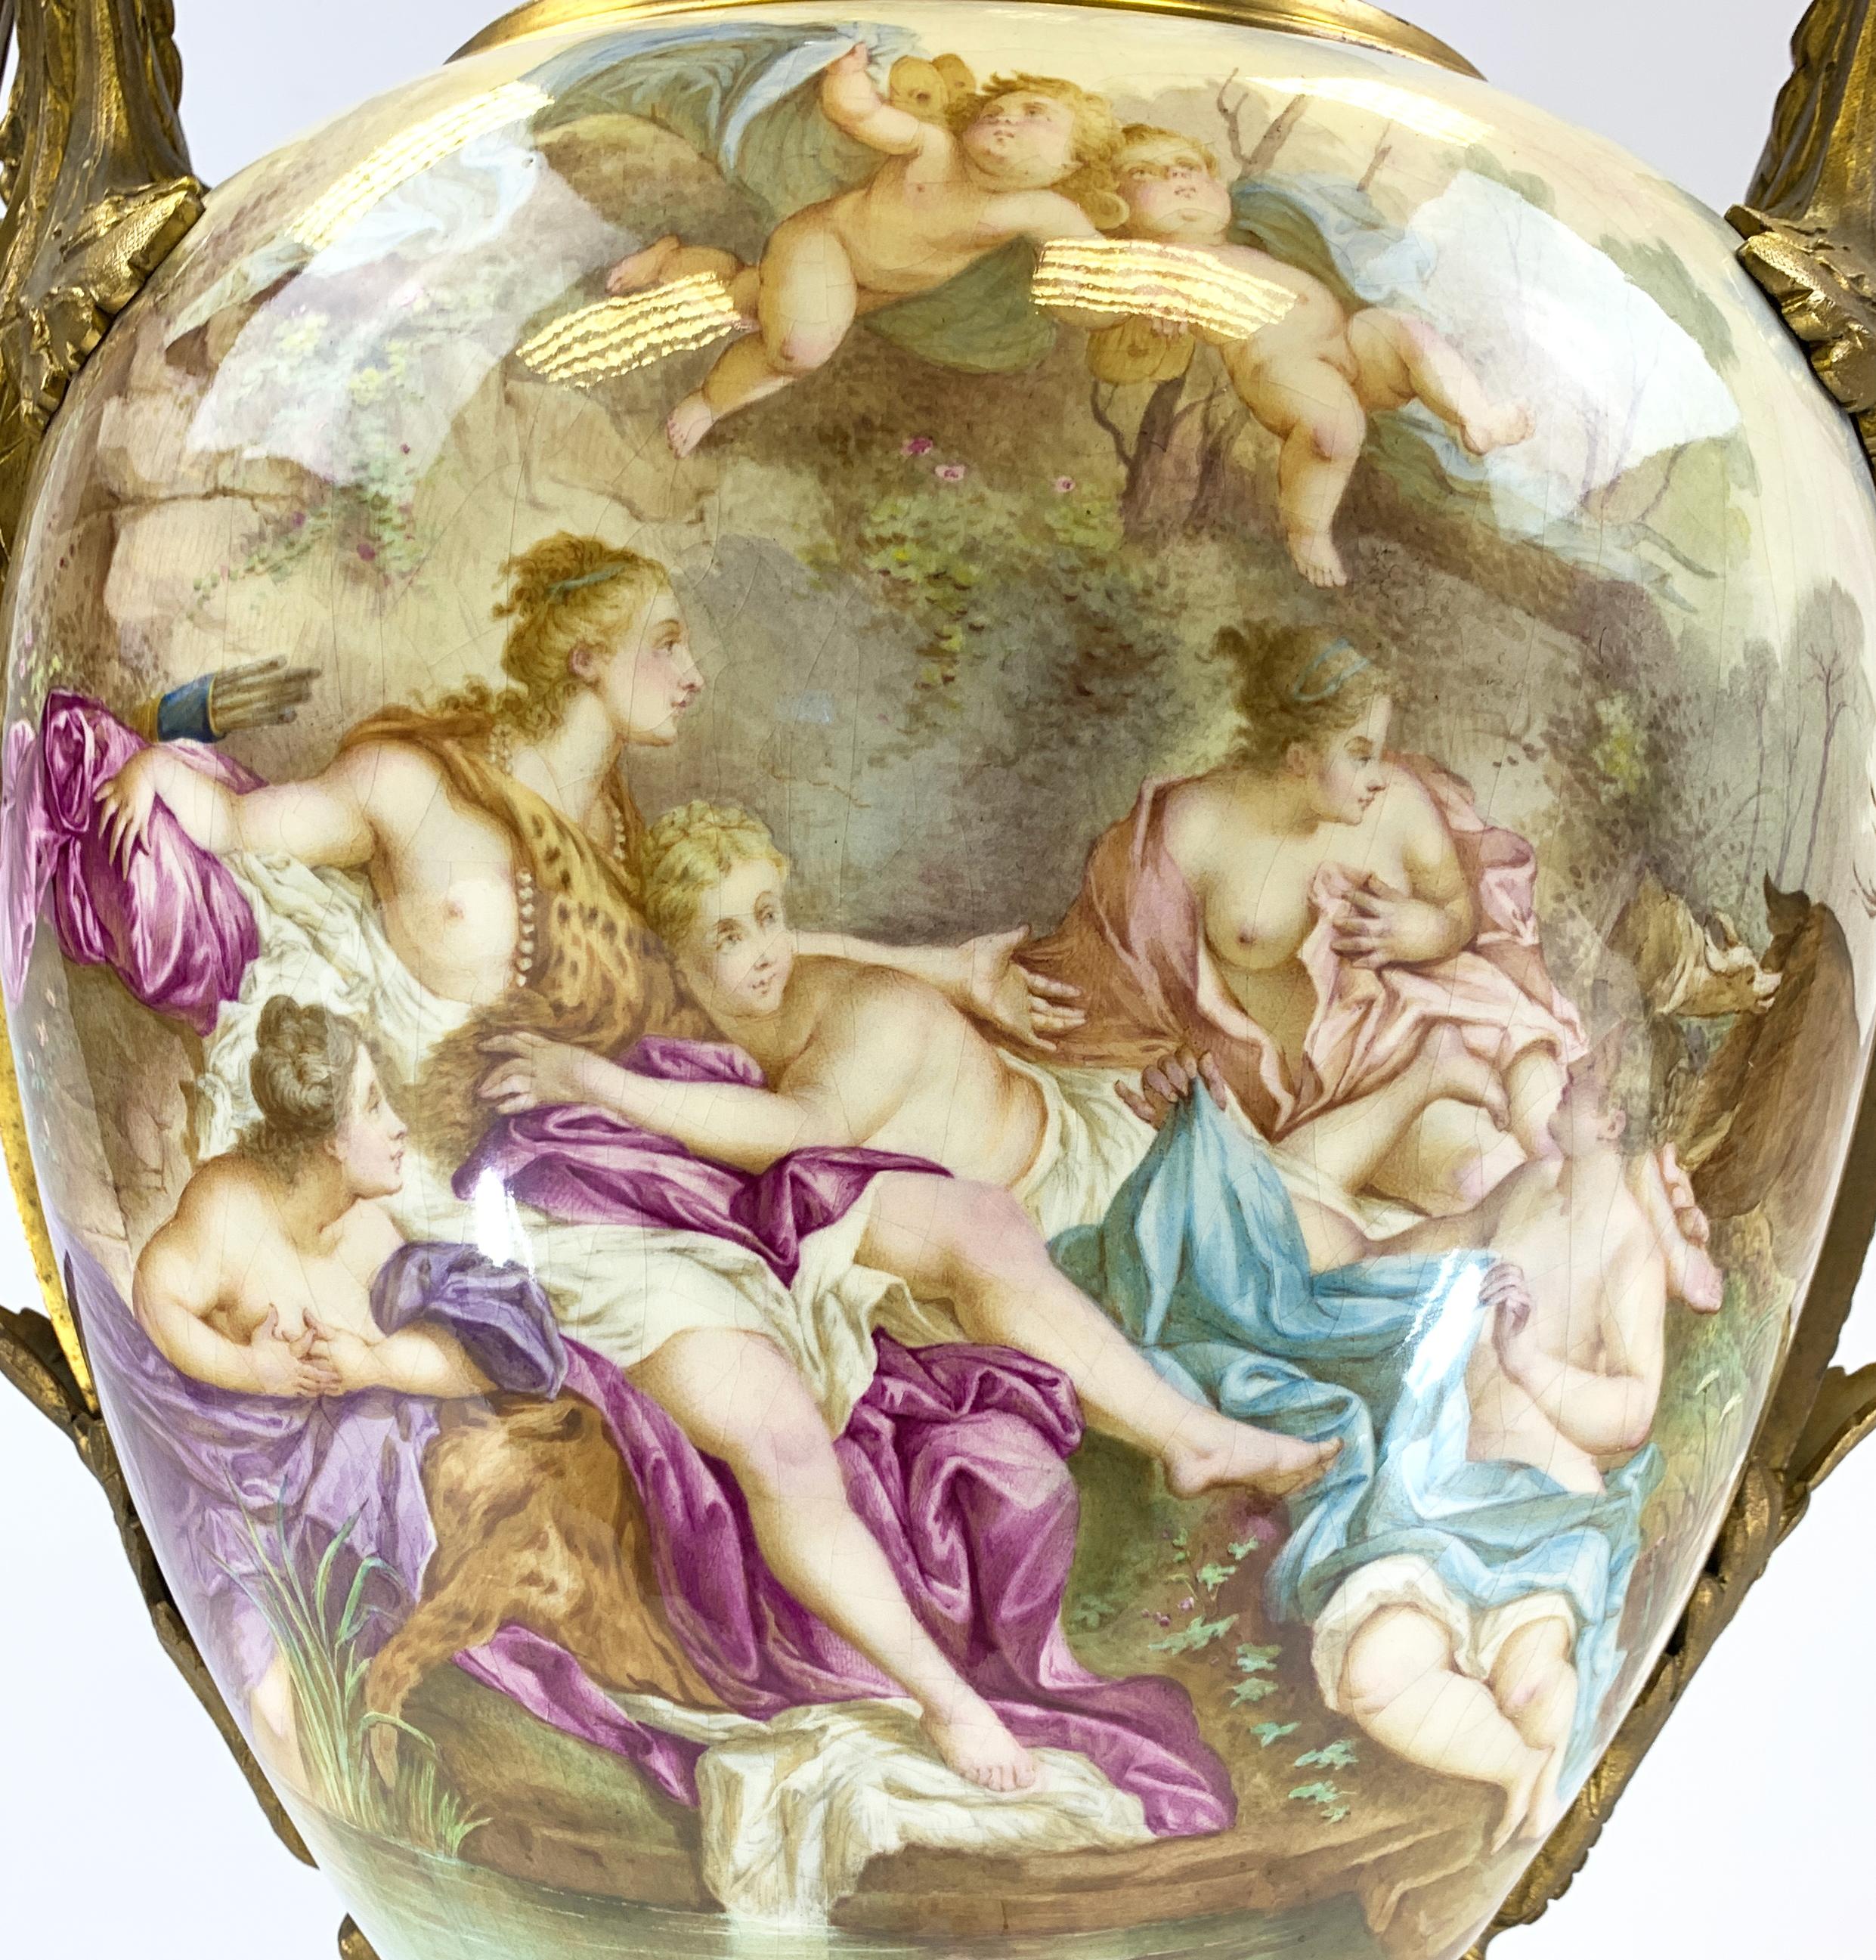 19th Century French Ormolu Mounted Sevres Style Porcelain Vase